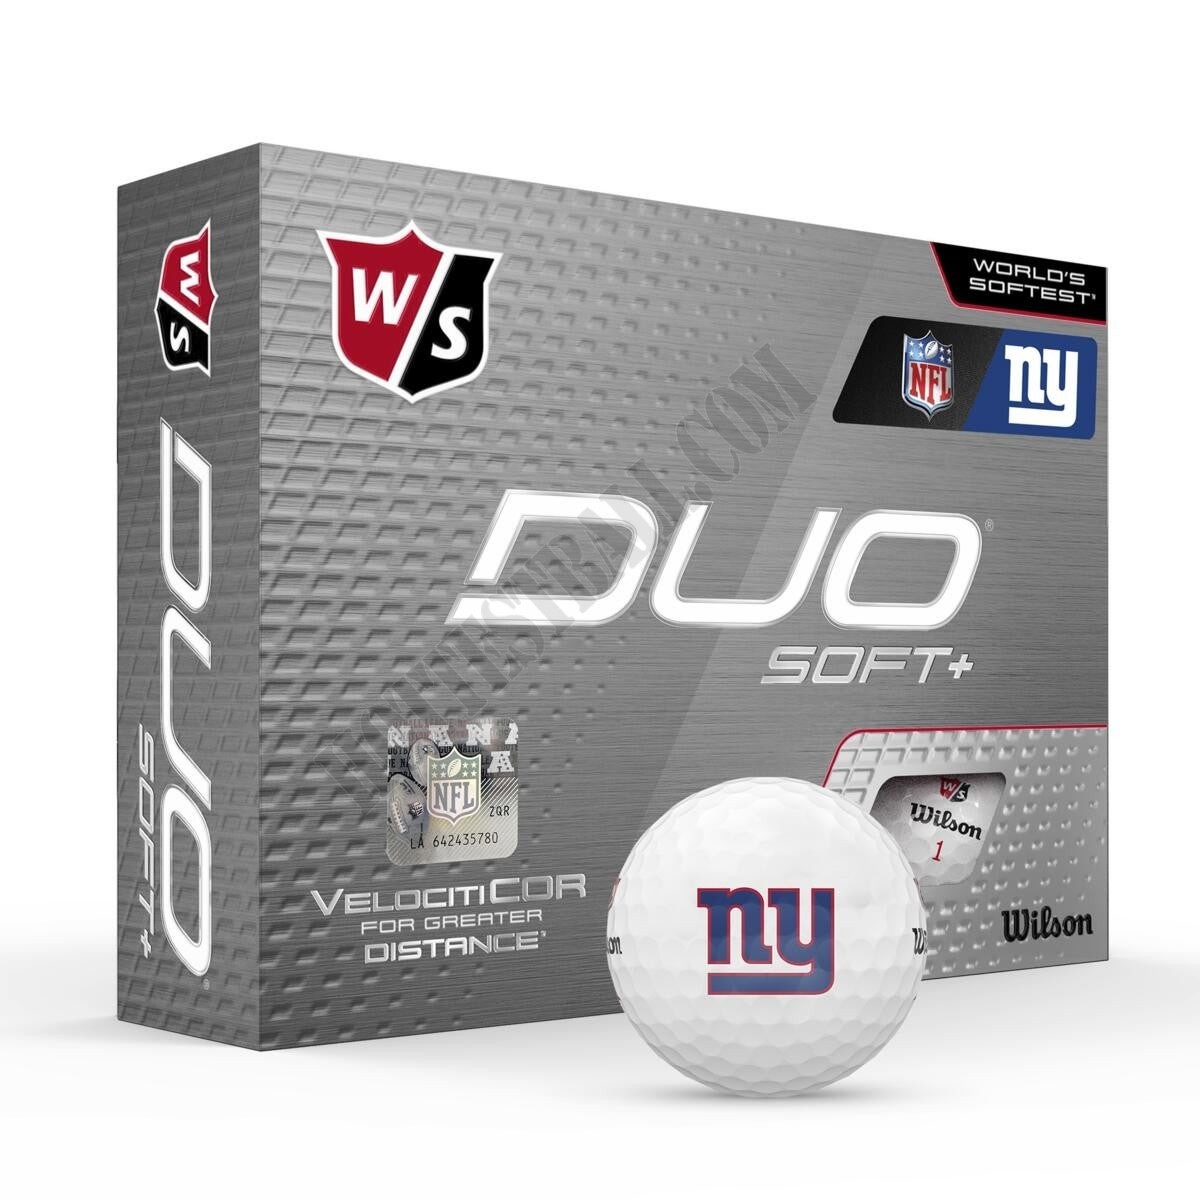 Duo Soft+ NFL Golf Balls - New York Giants ● Wilson Promotions - -0